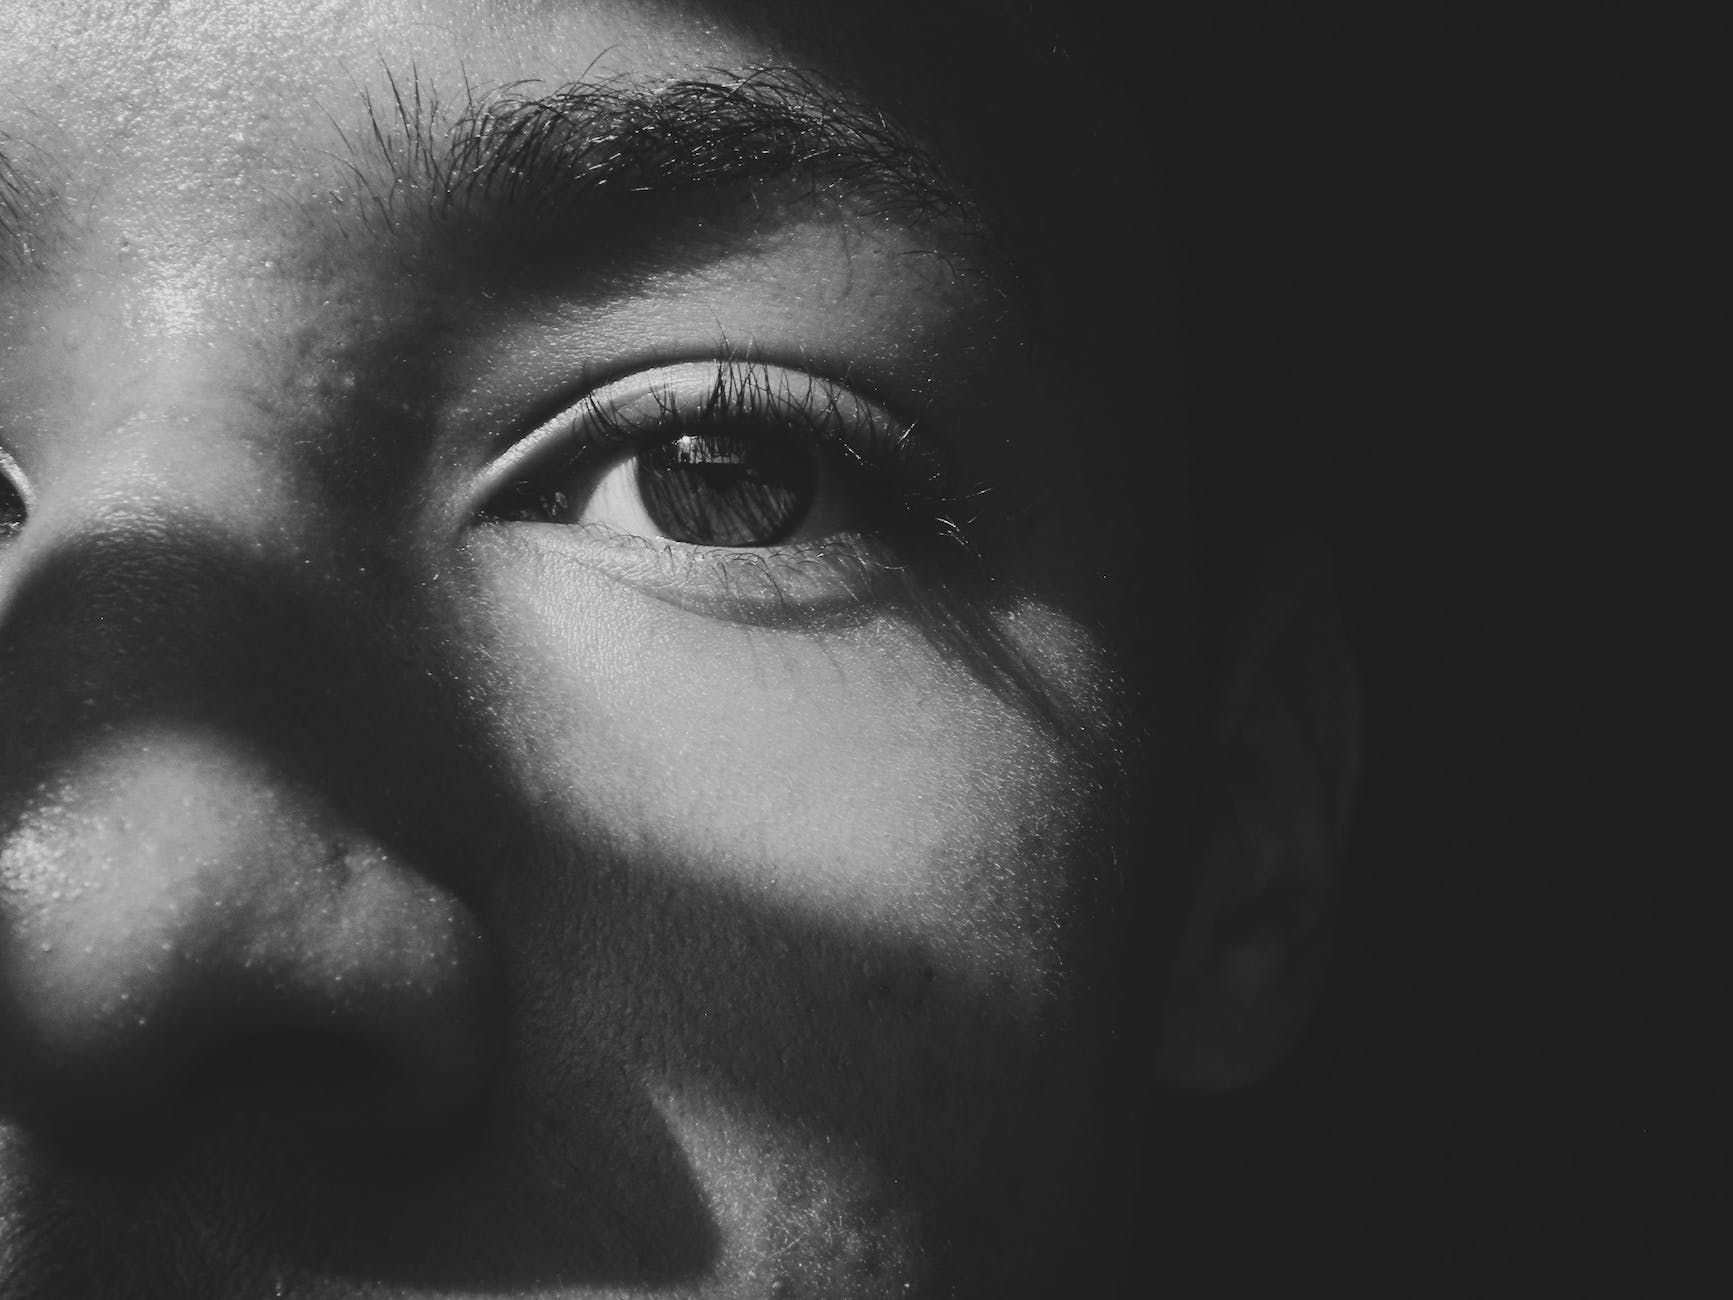 monochrome photo of person s eye